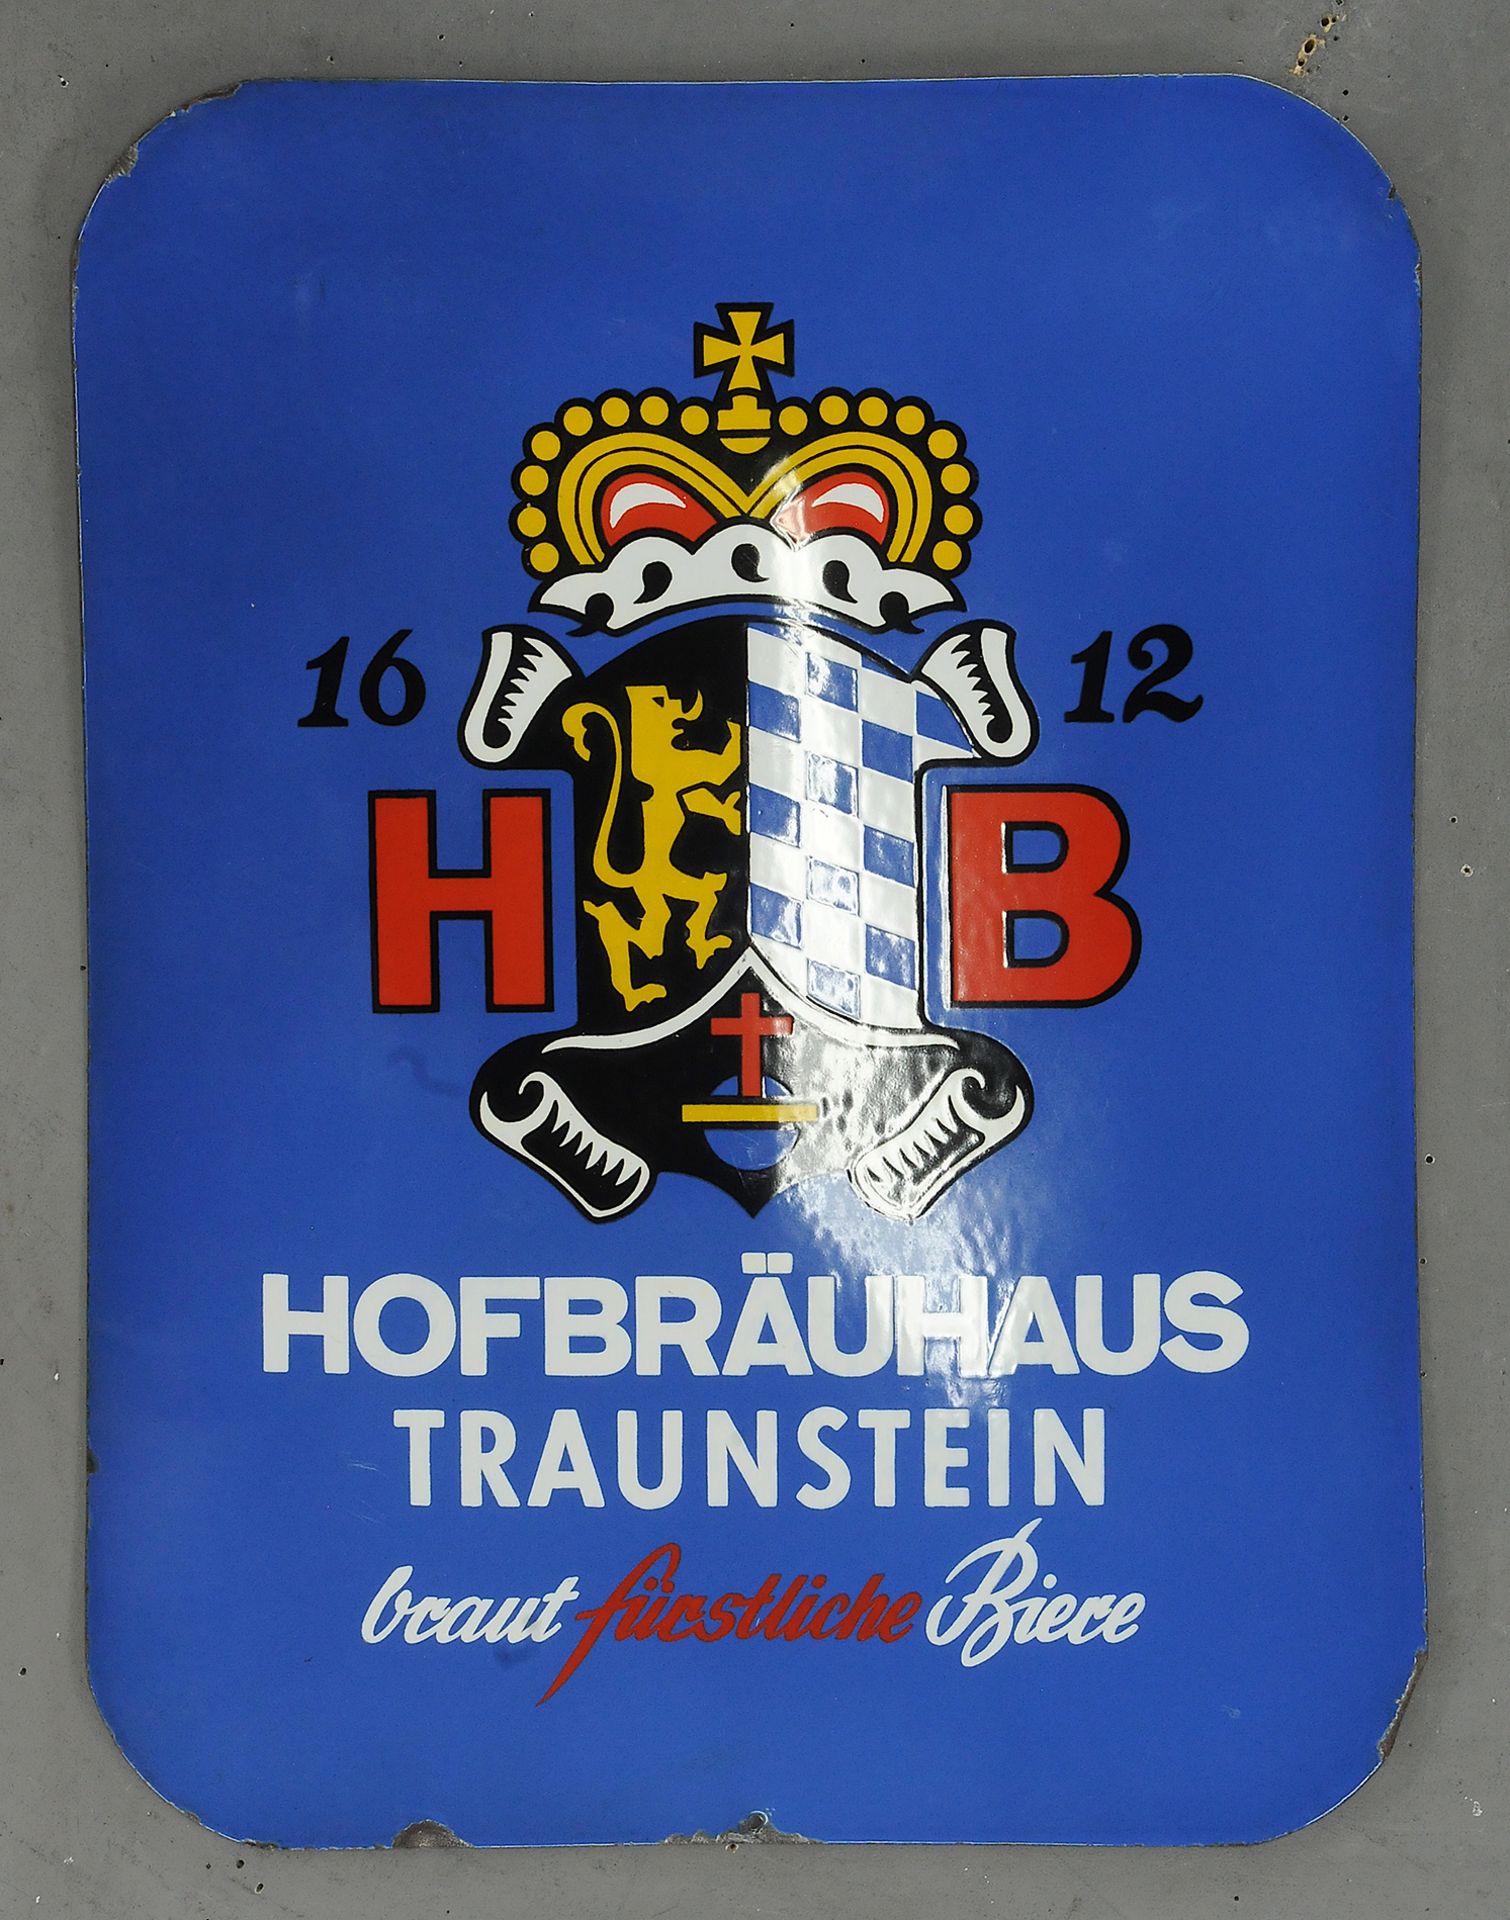 Hofbräuhaus Traunstein - Image 3 of 3